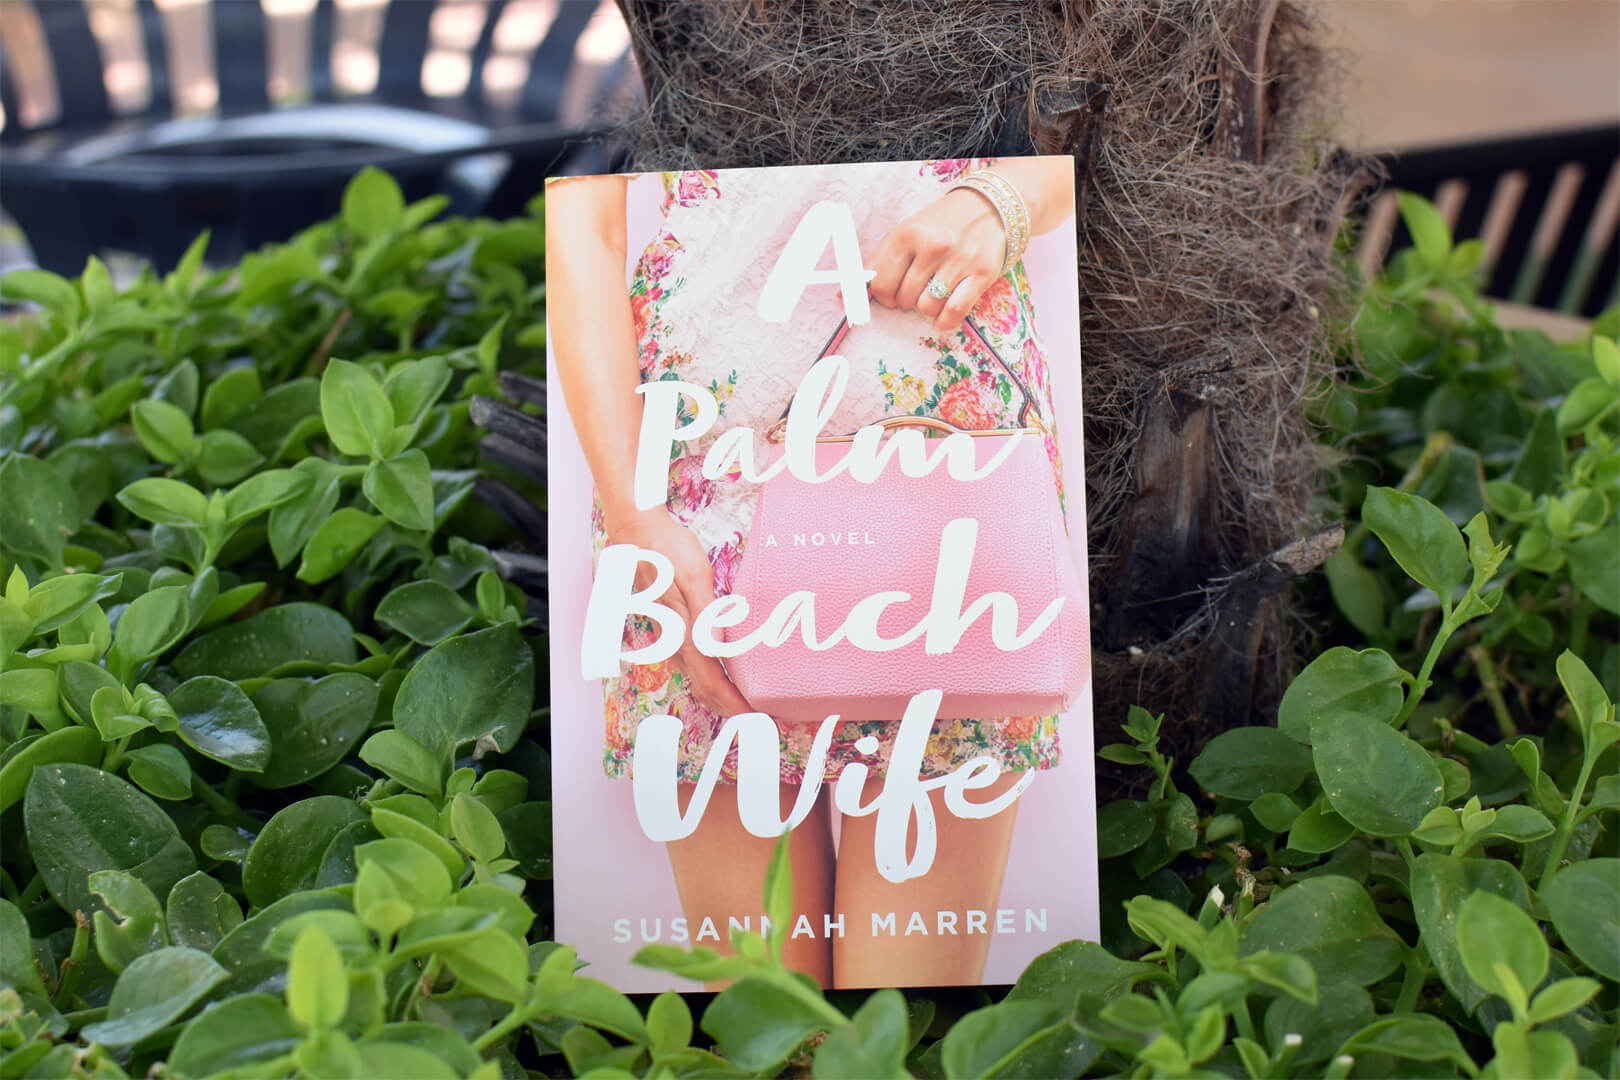 Review: A Palm Beach Wife by Susannah Marren